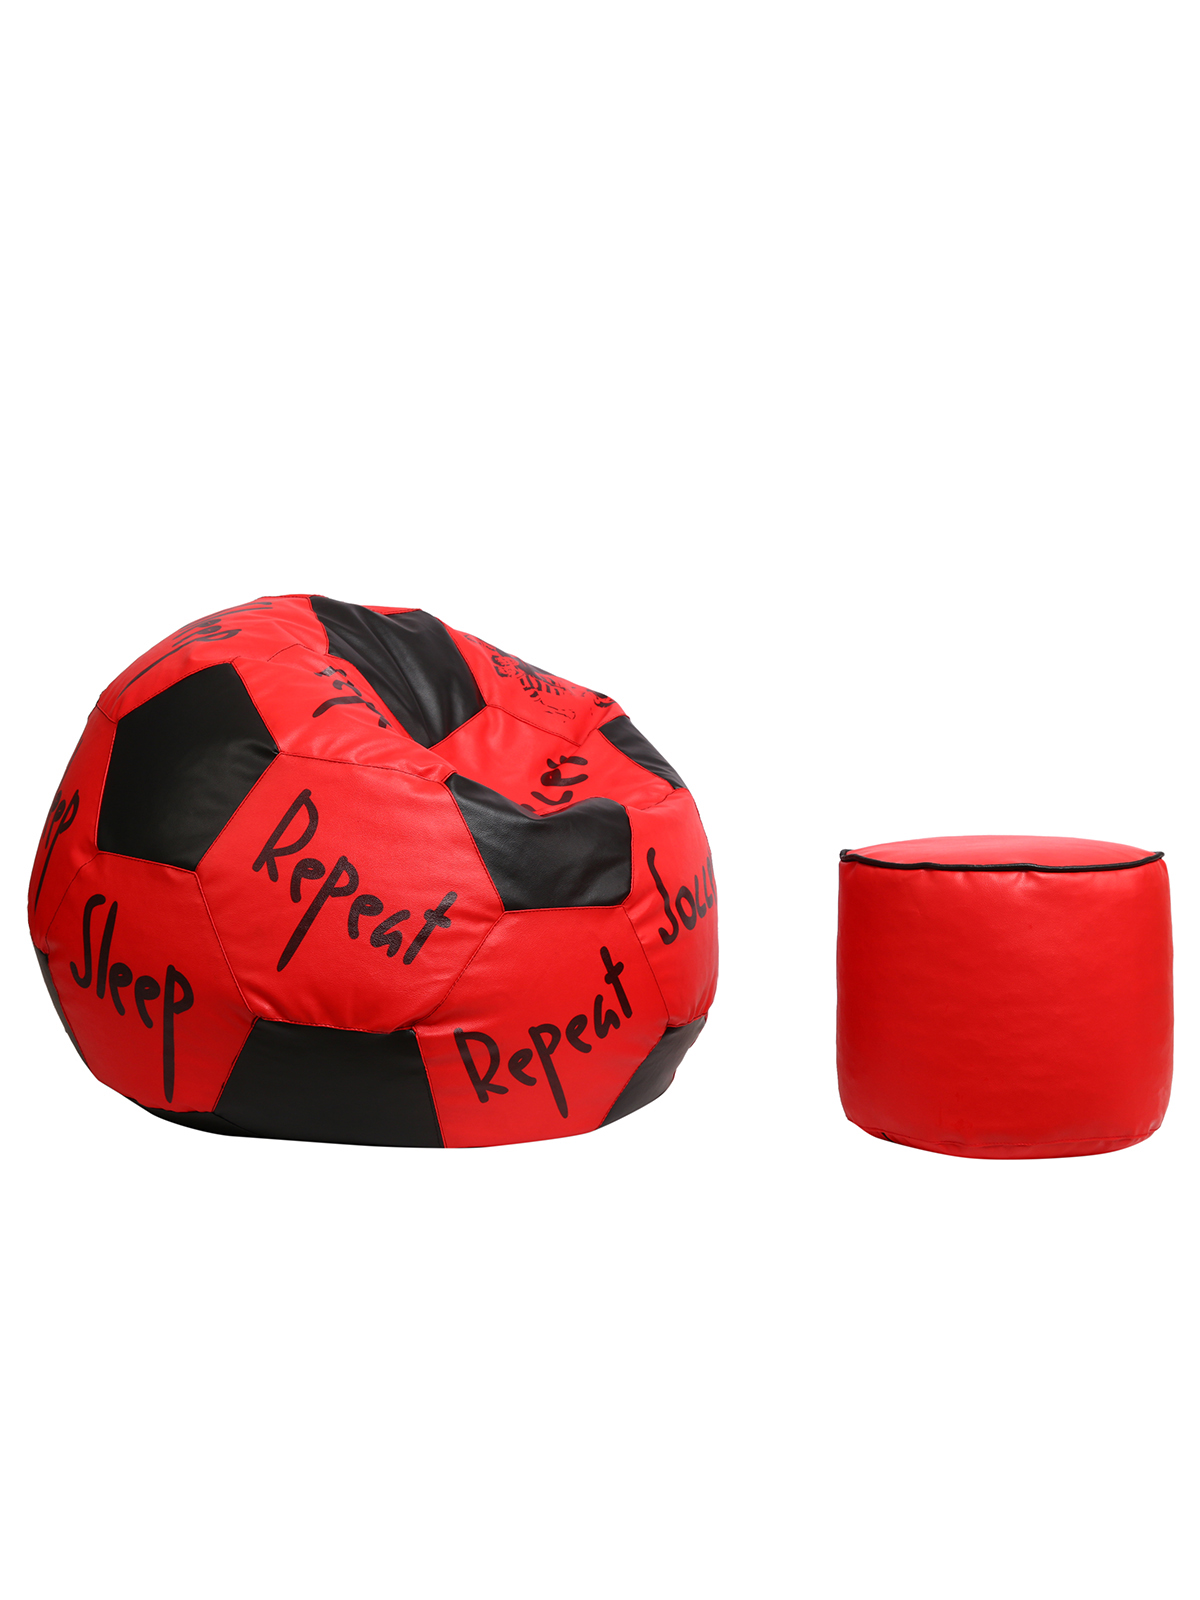 ORKA Digital Printed Sports Bean Bag Red Repeat Soccer Theme    